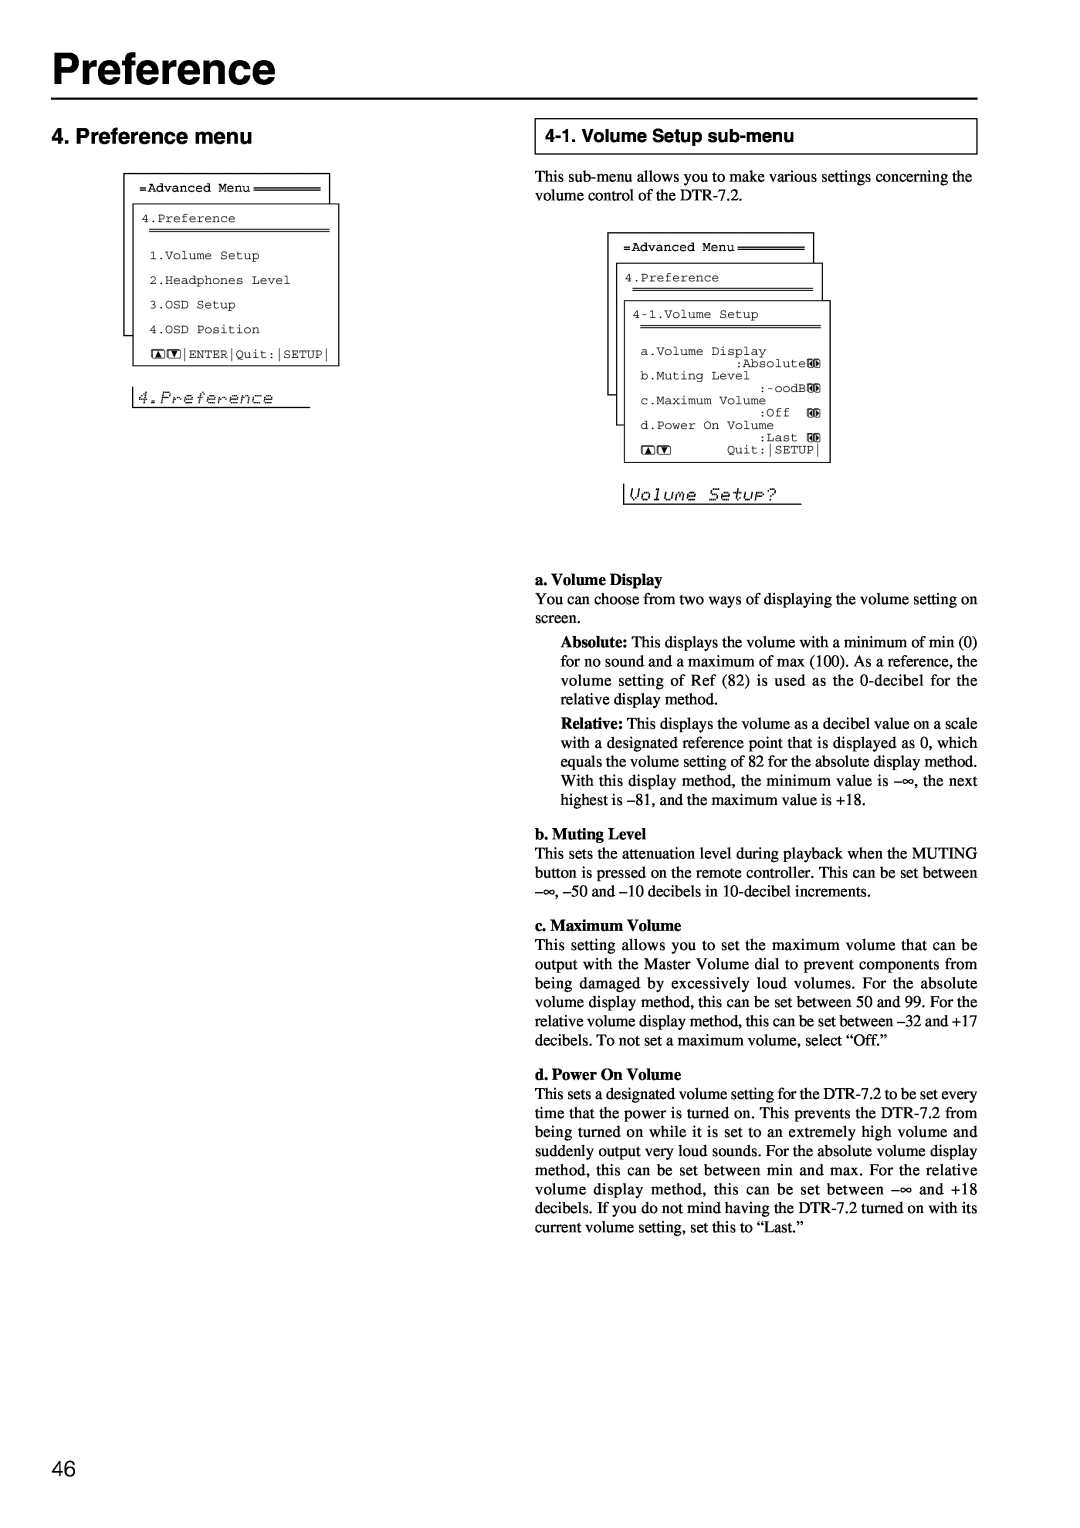 Integra DTR-7.2 instruction manual Preference menu 